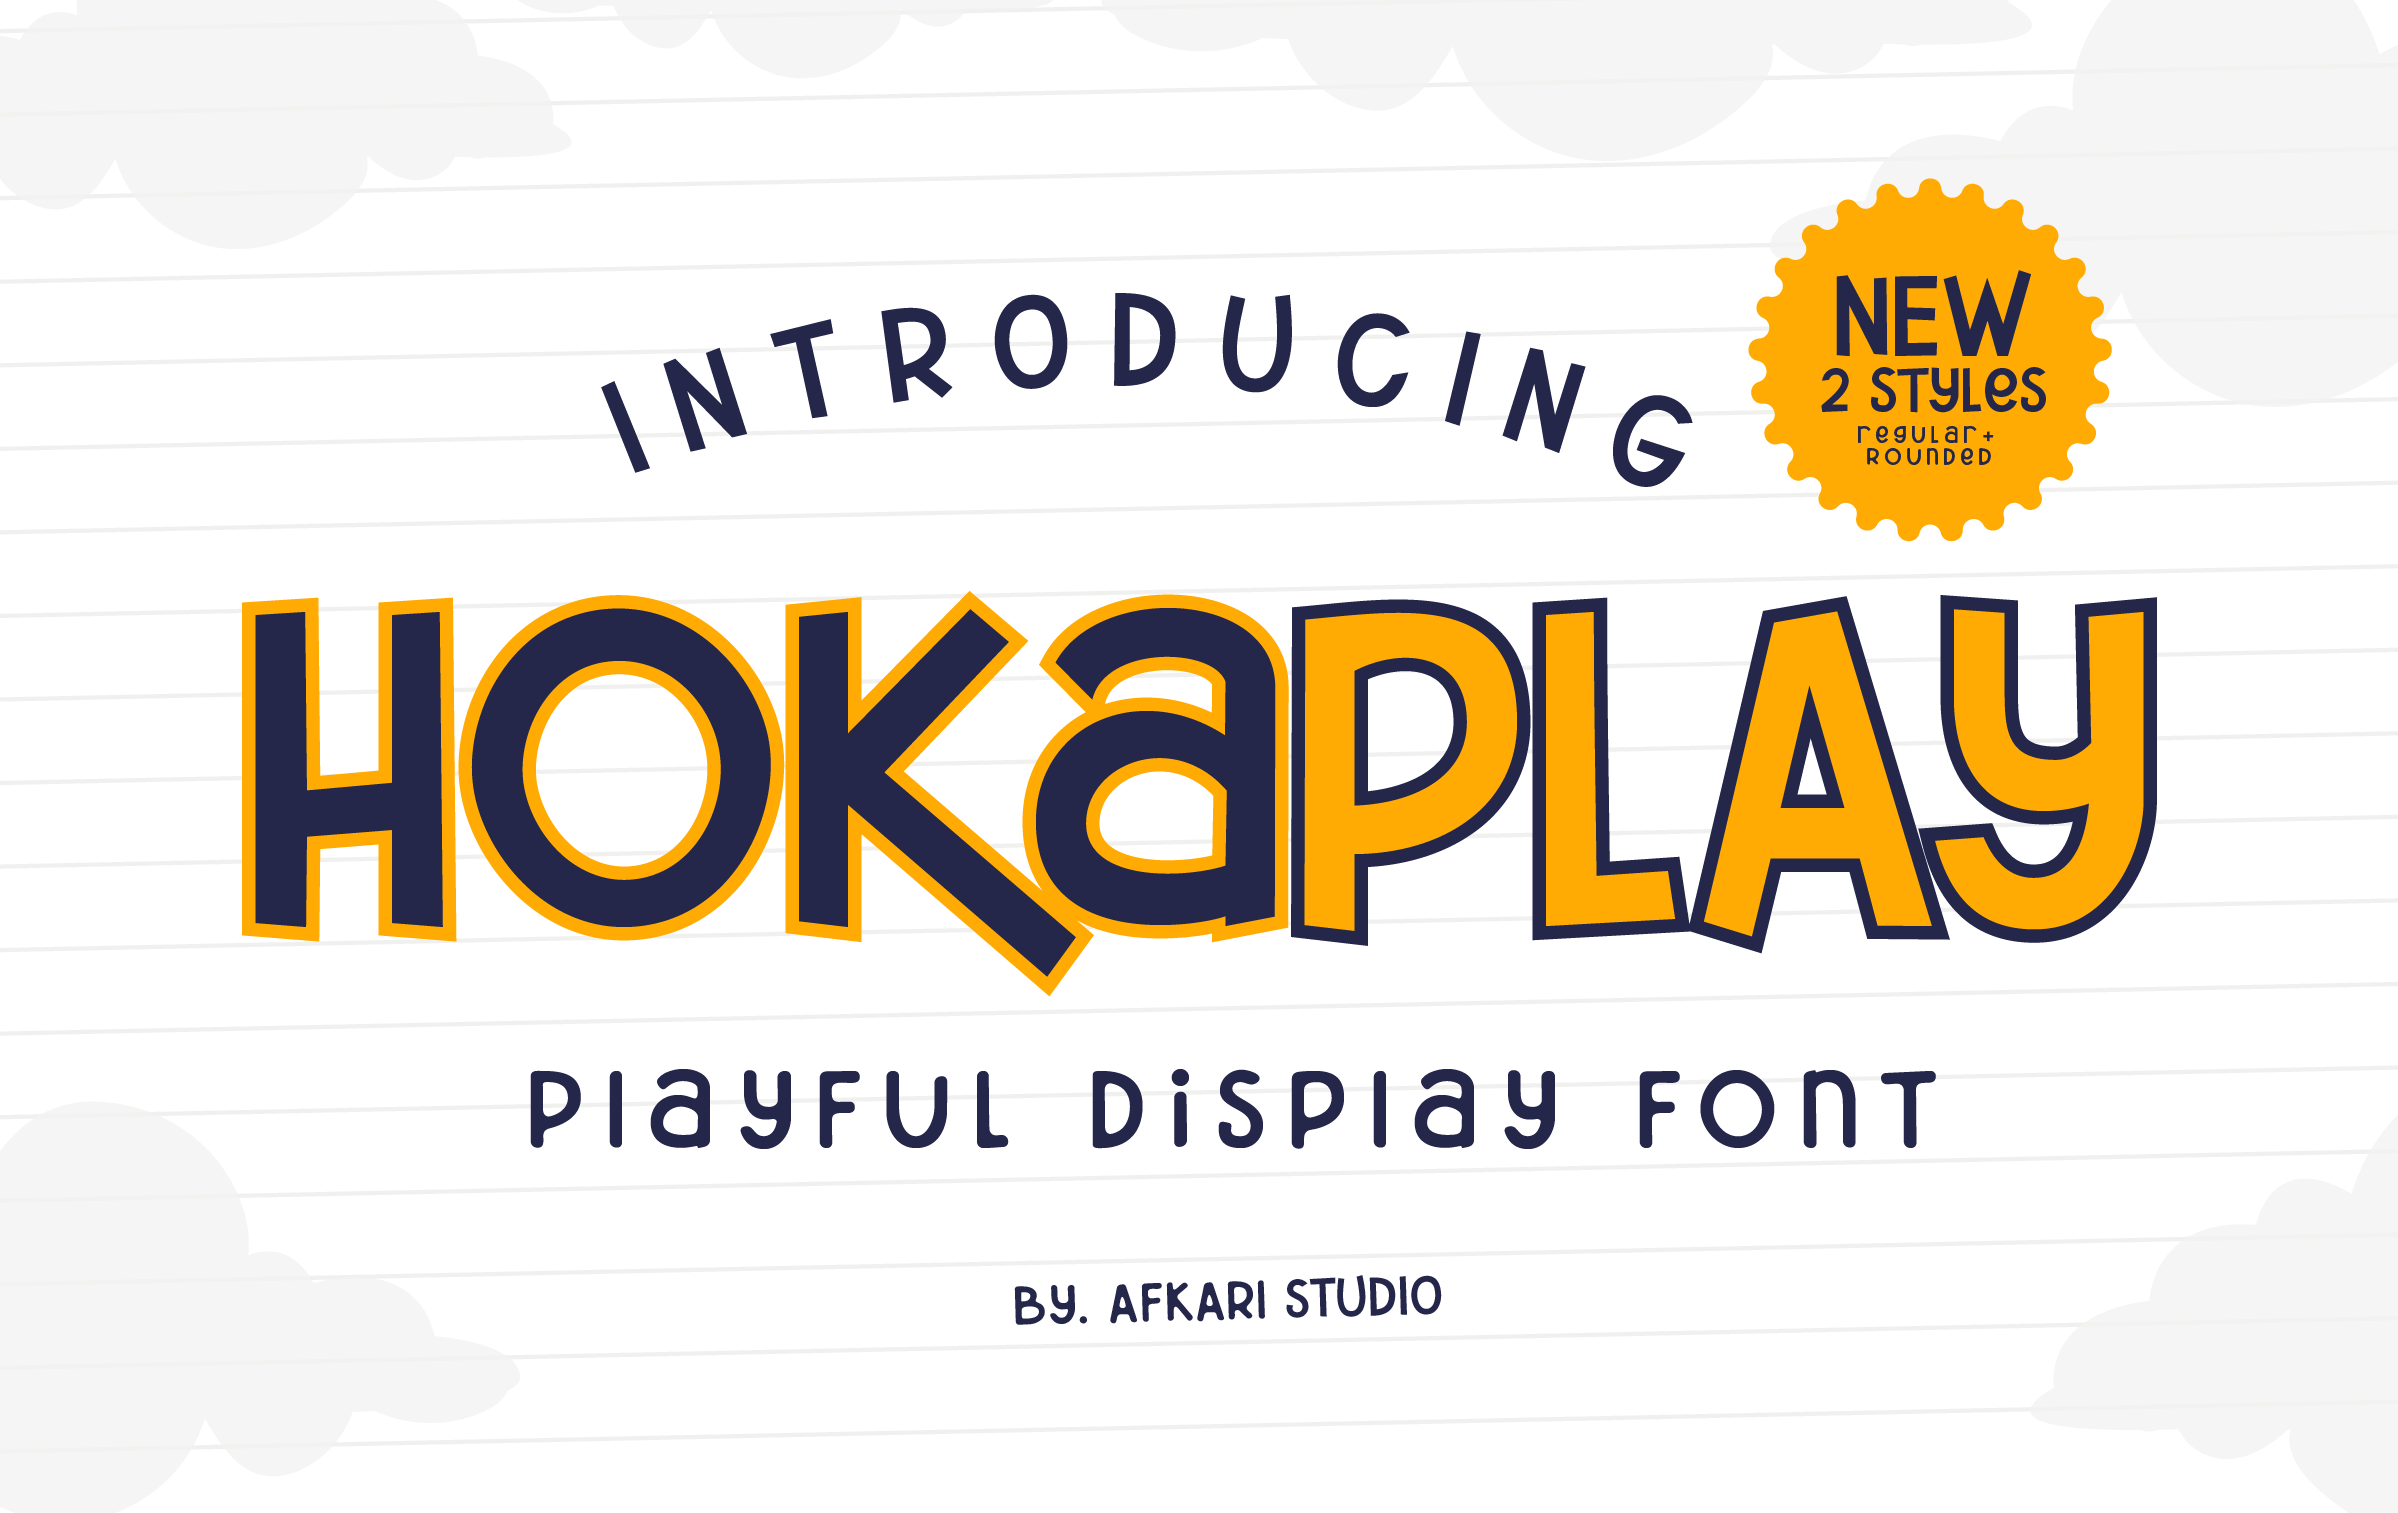 Hokaplay Display Font